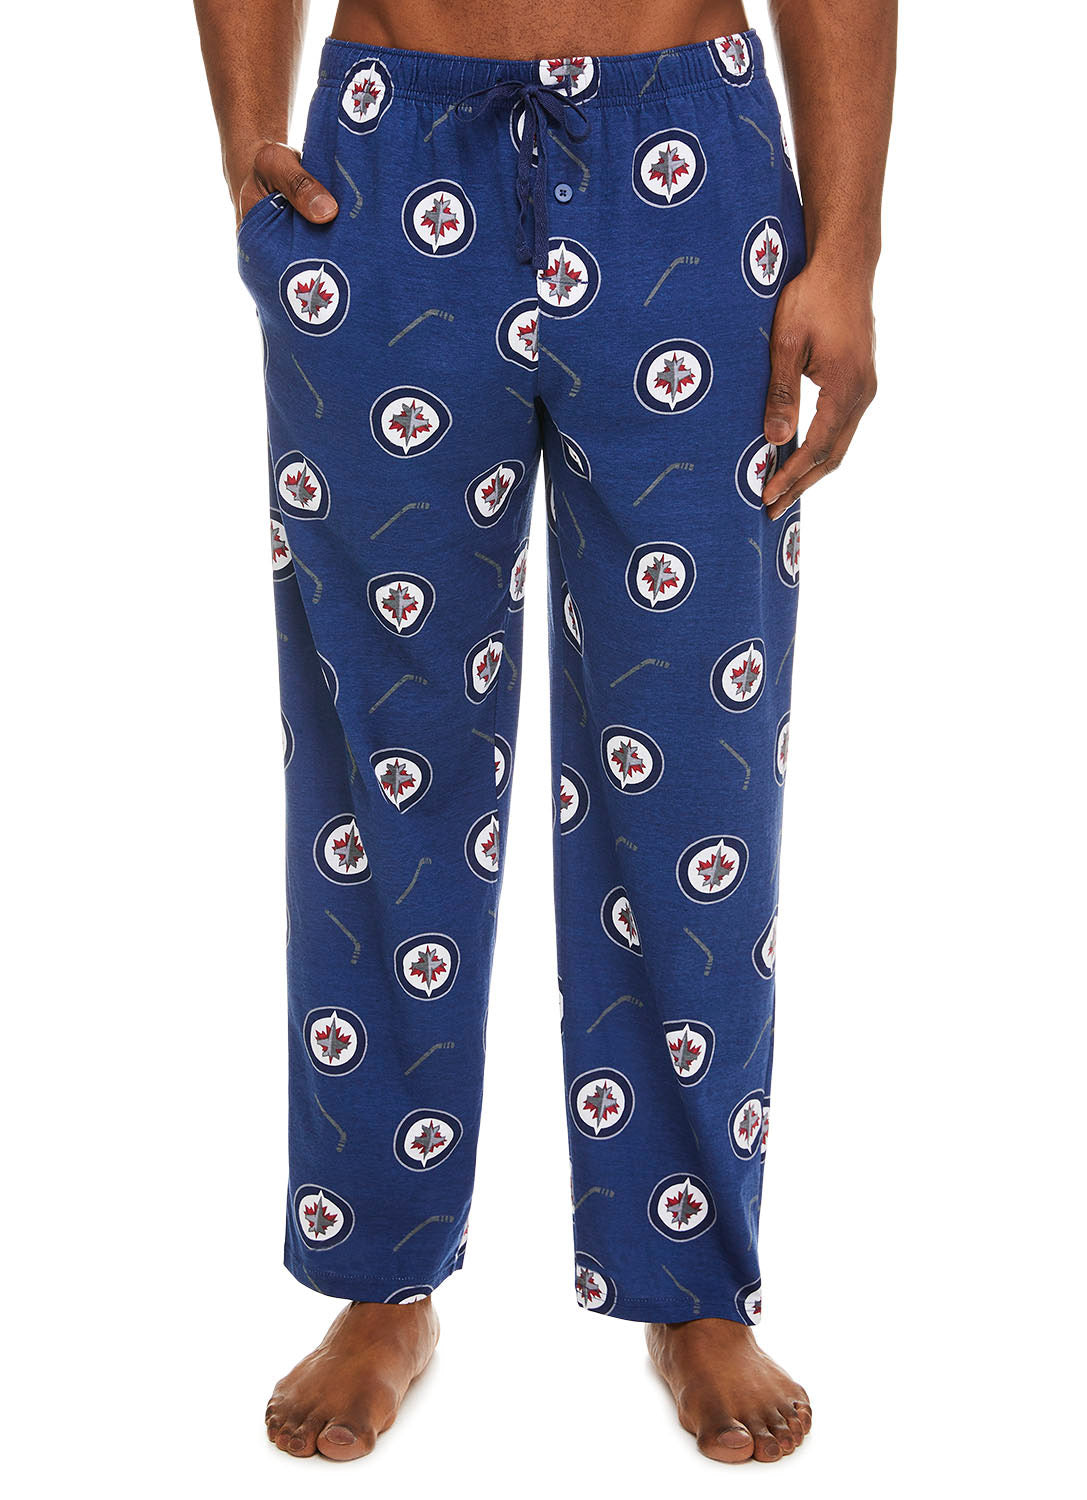 Man wearing Winnipeg Jets Cotton Sleep Pant with logo and hockey stick print (Blue)